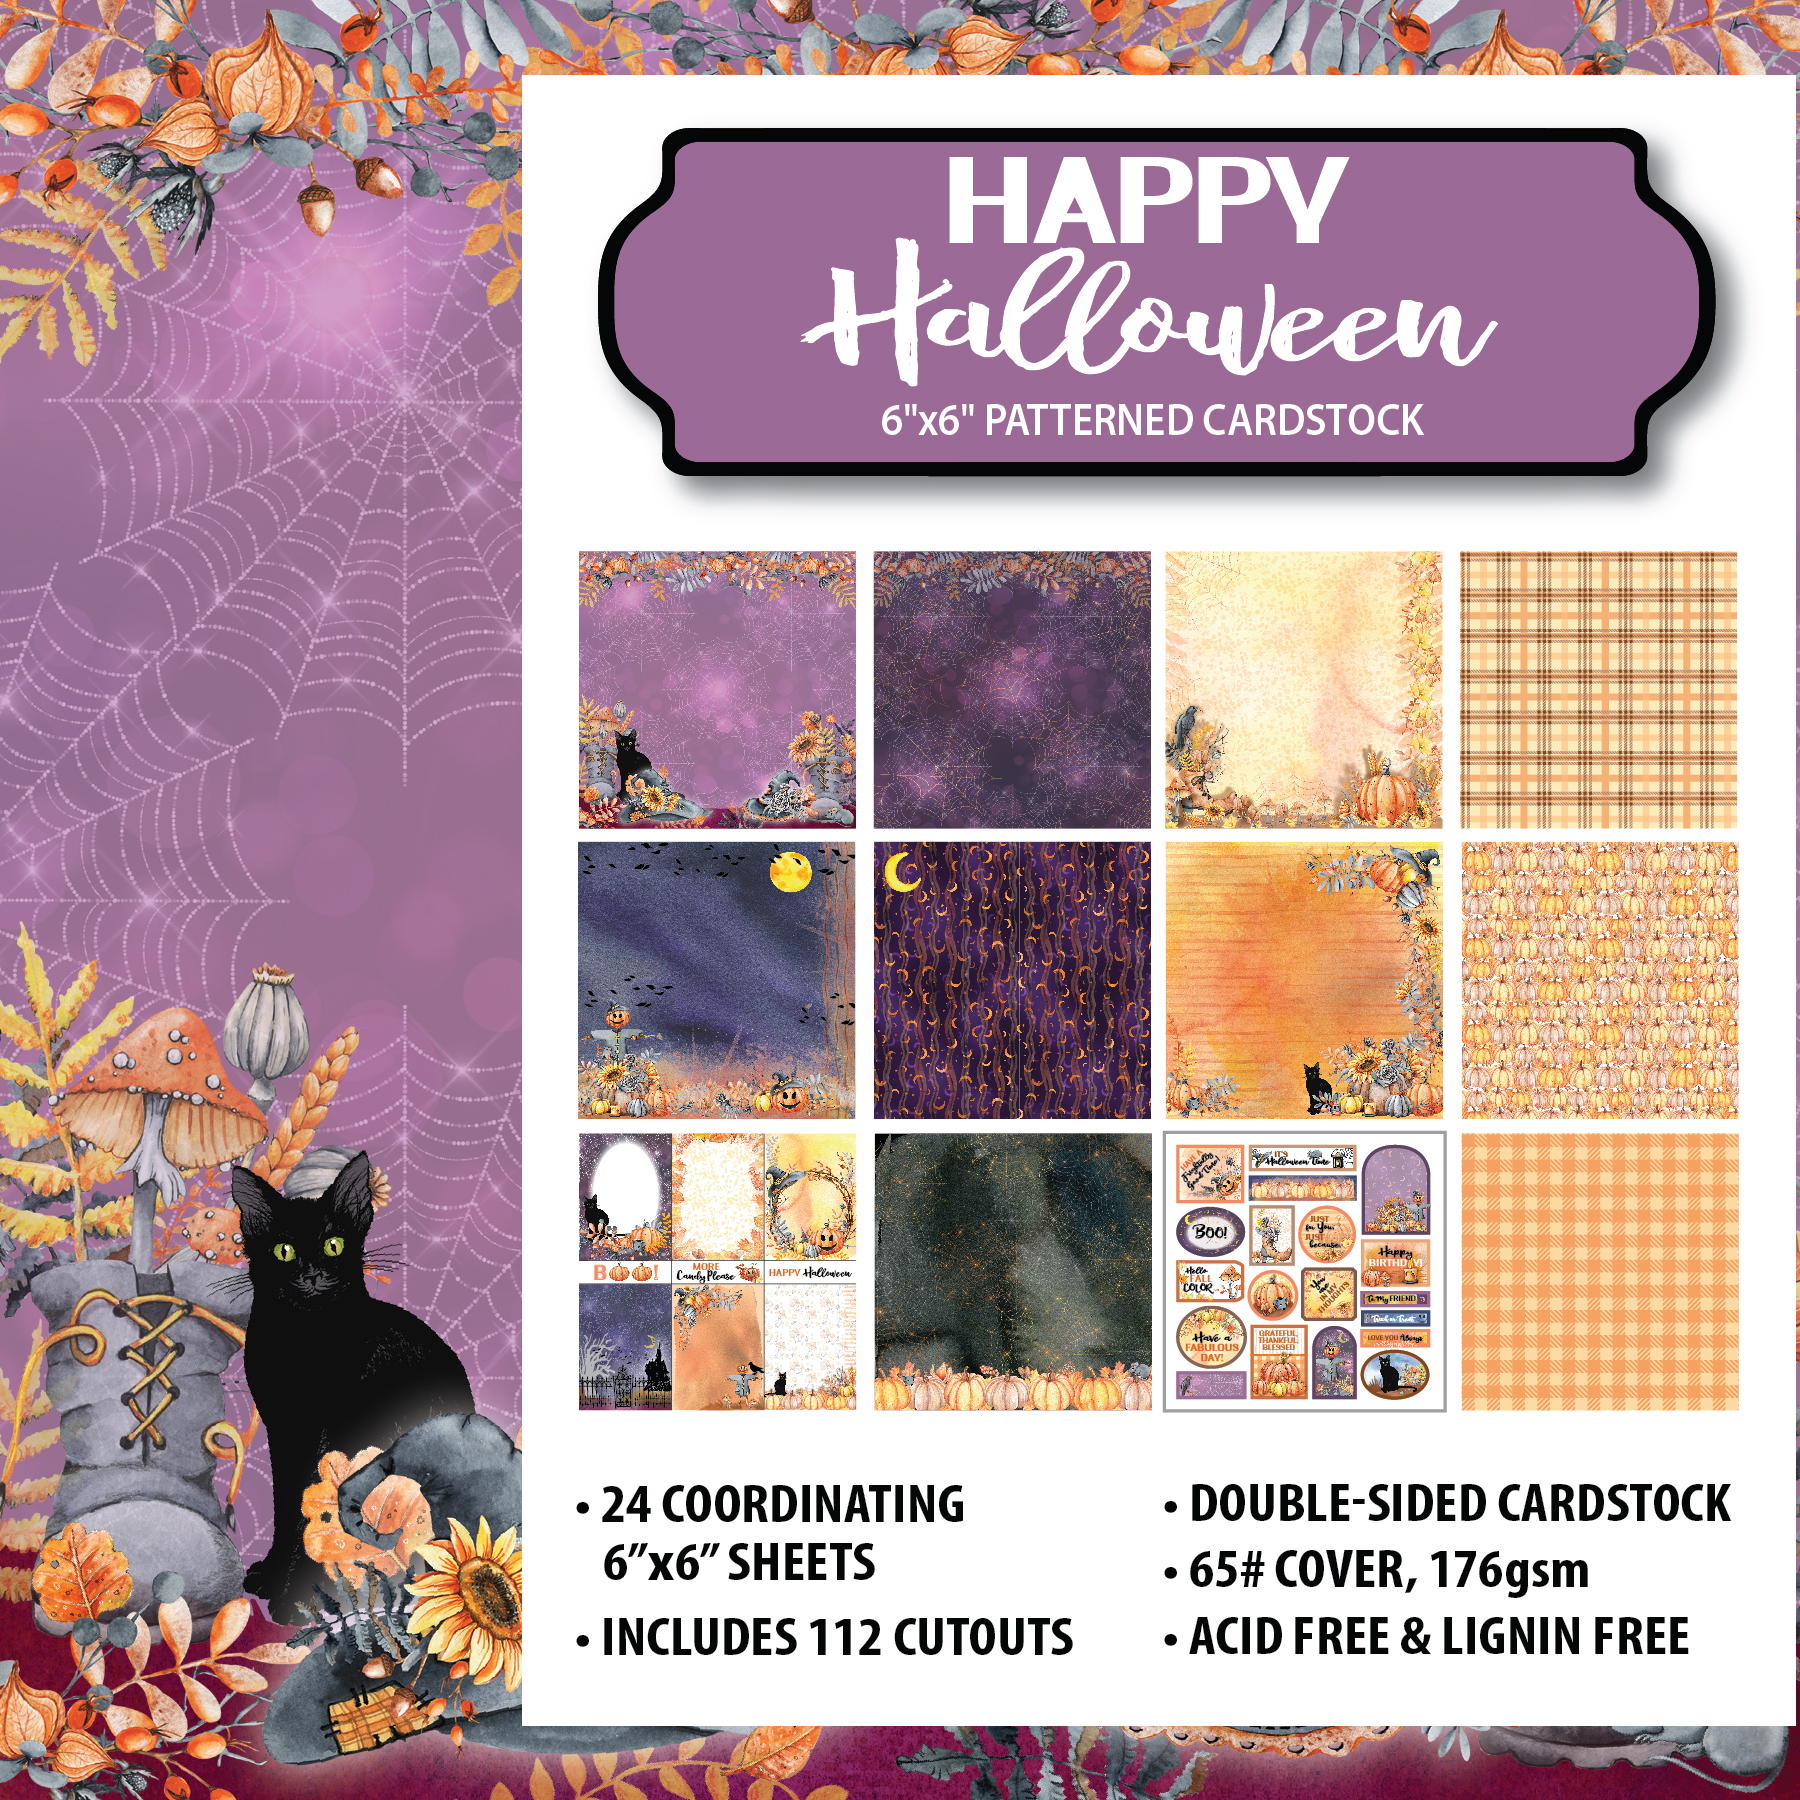 Happy Halloween 6x6 Patterned Cardstock